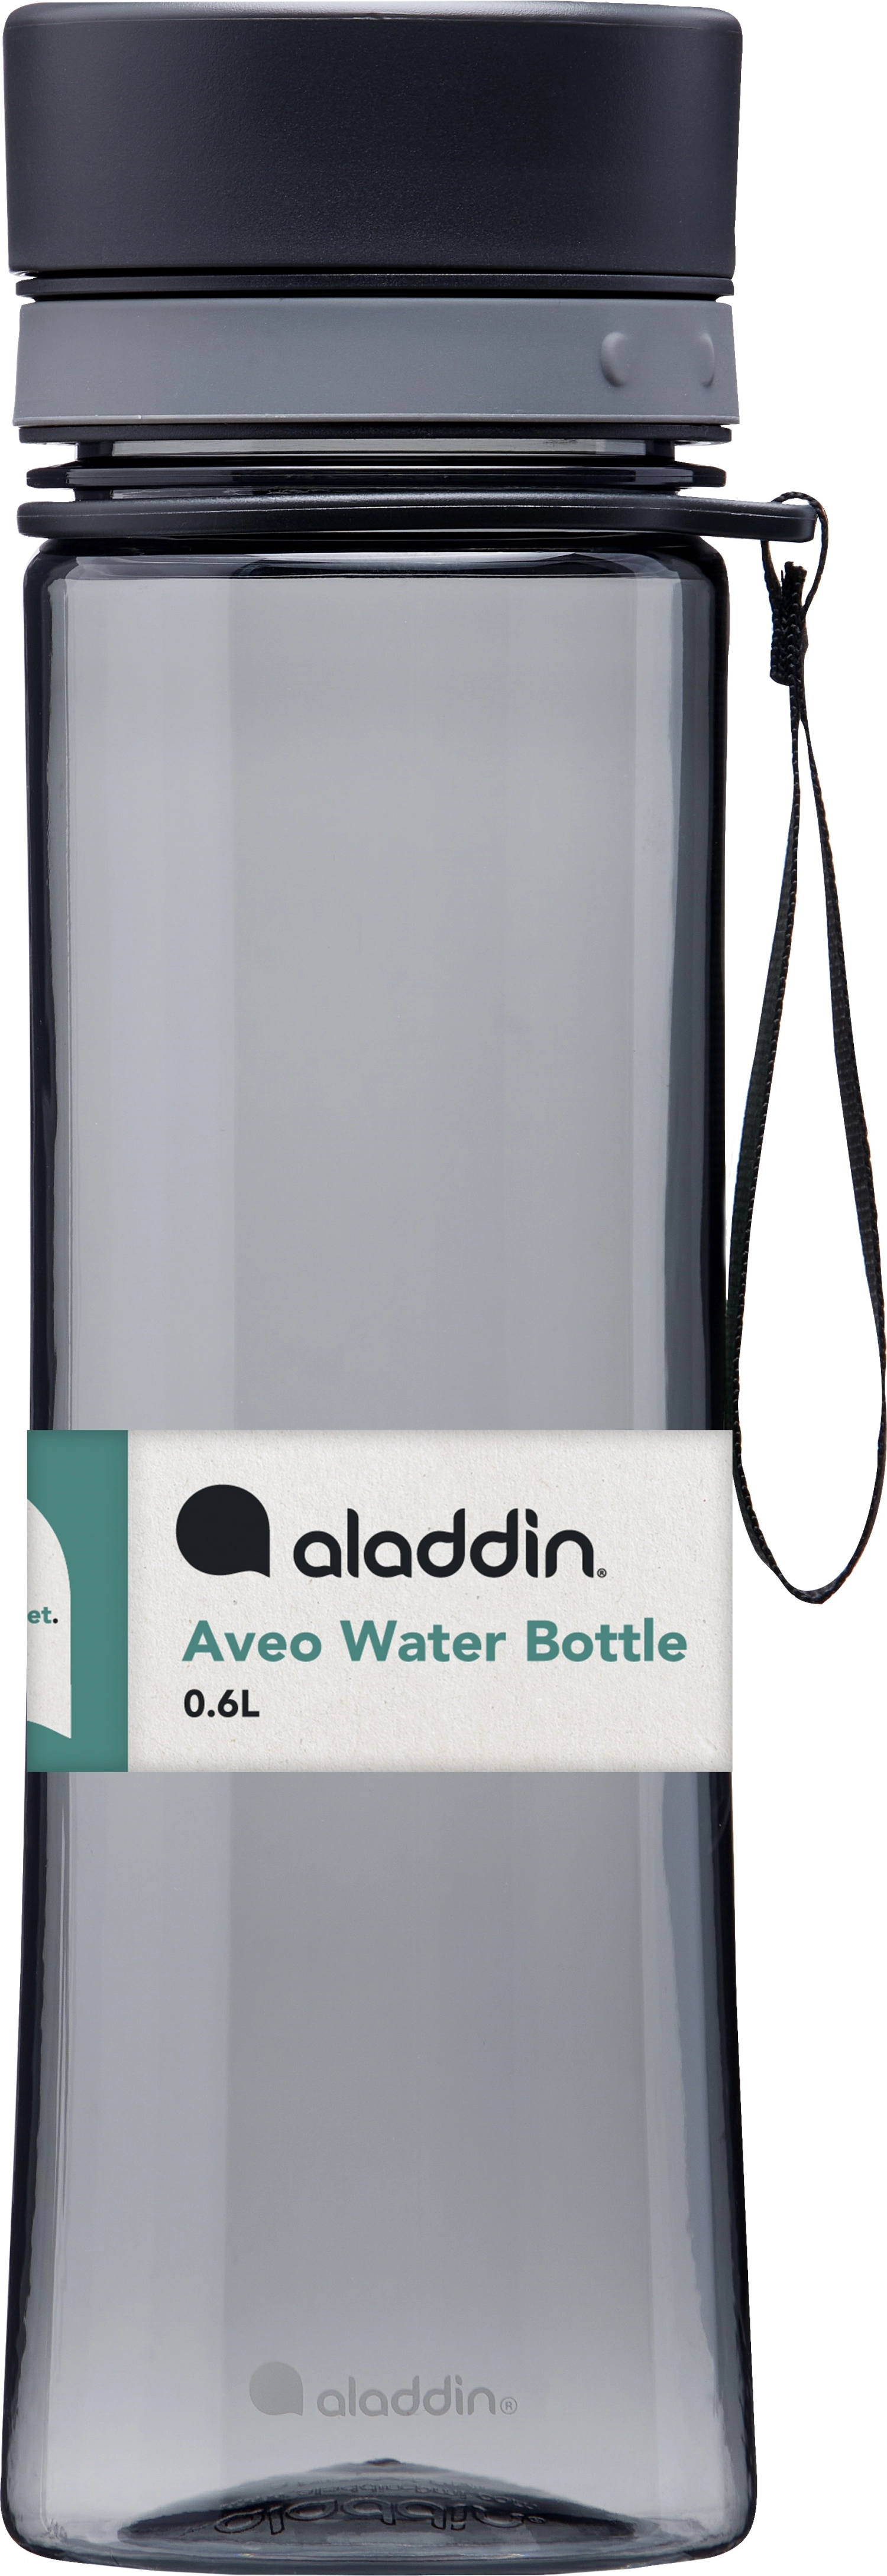 Aladdin aveo water bottle 0.6l concrete grey